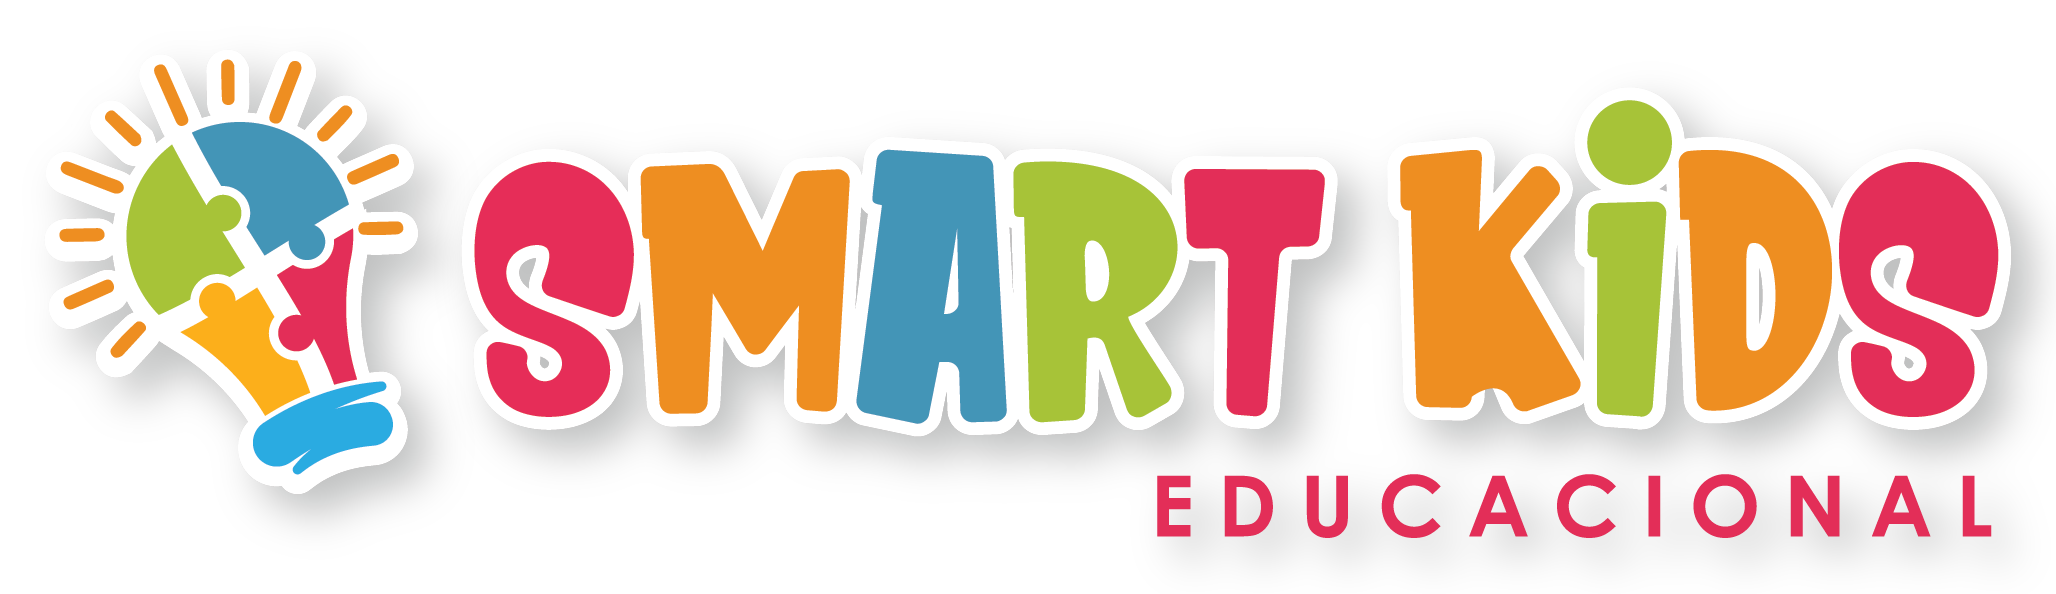 smartkidseducacional.com.br